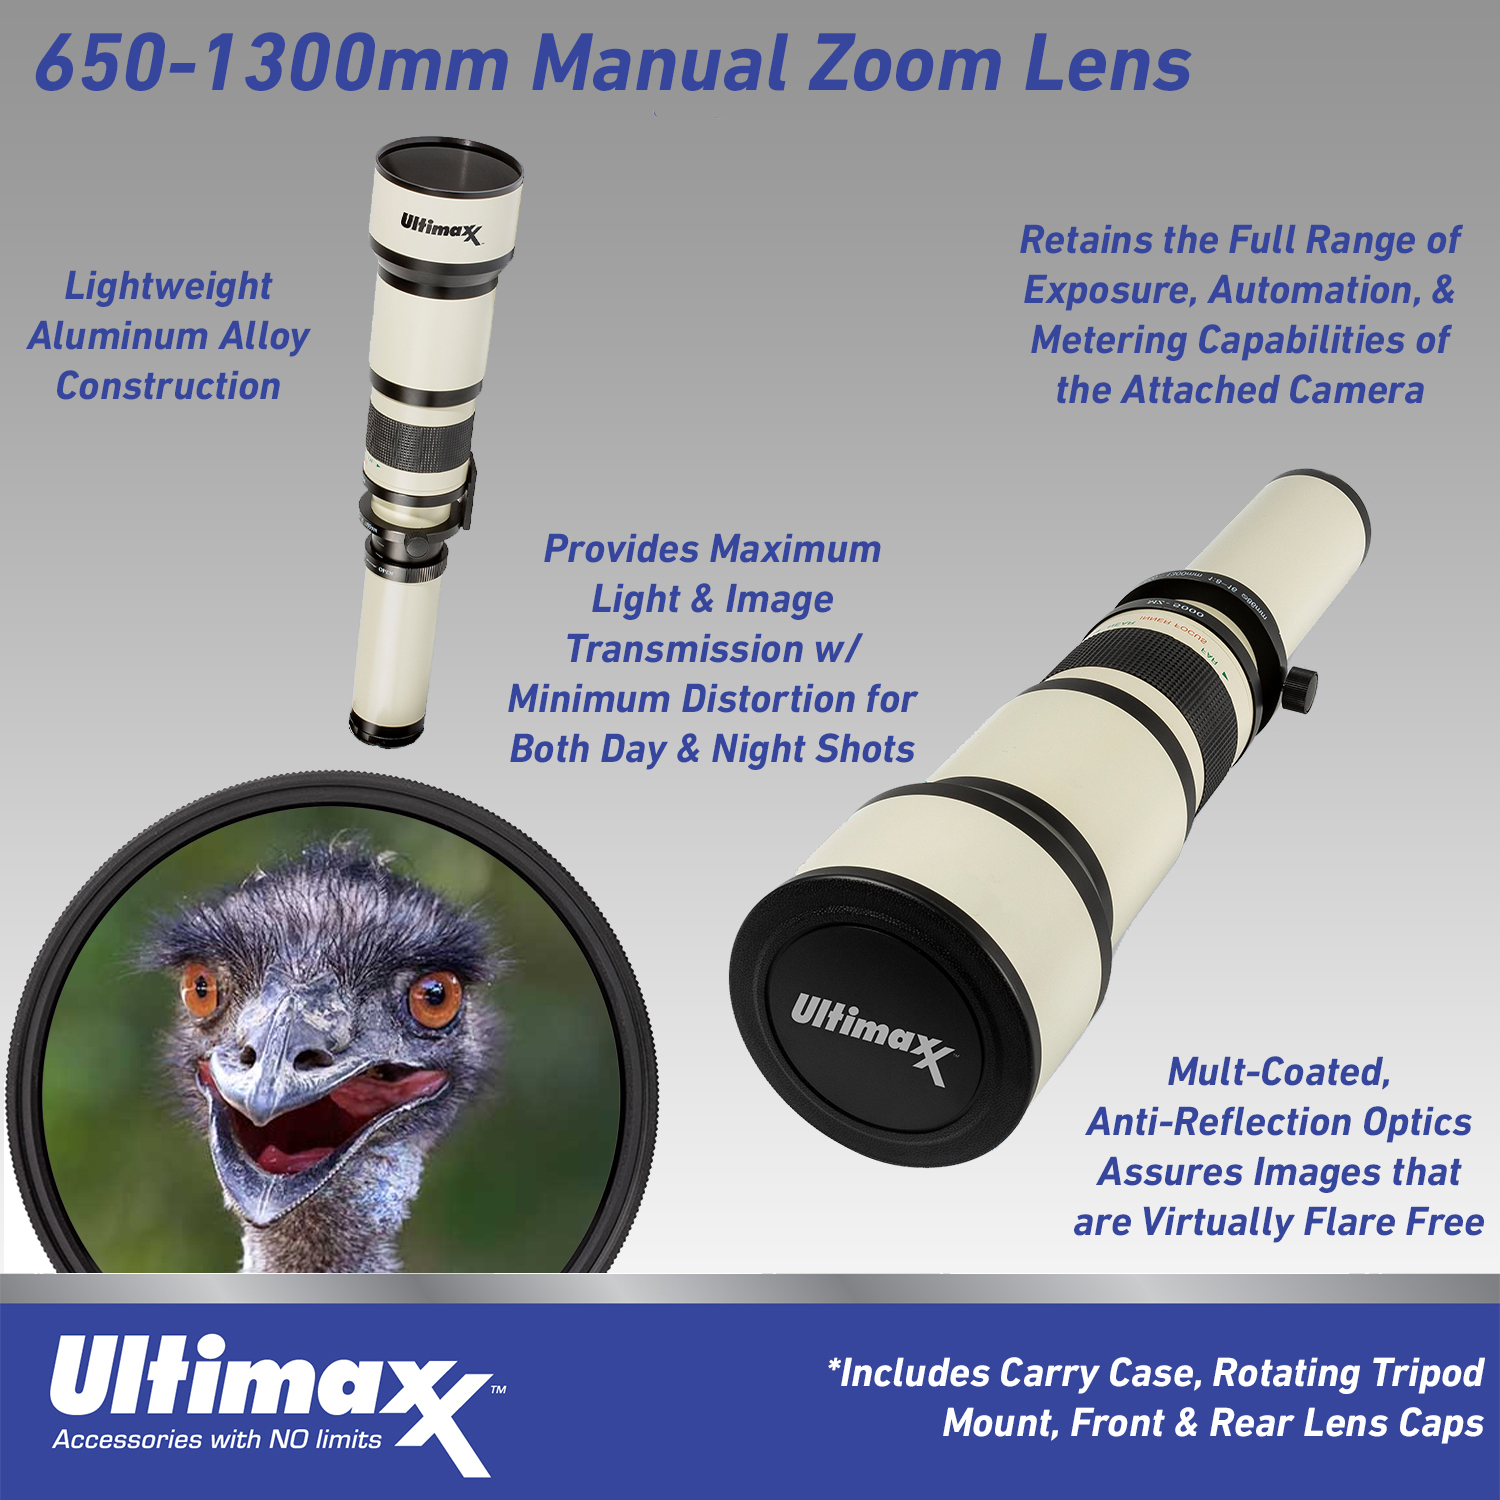 650-1300mm f/8 Manual Multi-Coated Telephoto Zoom T-Mount Lens